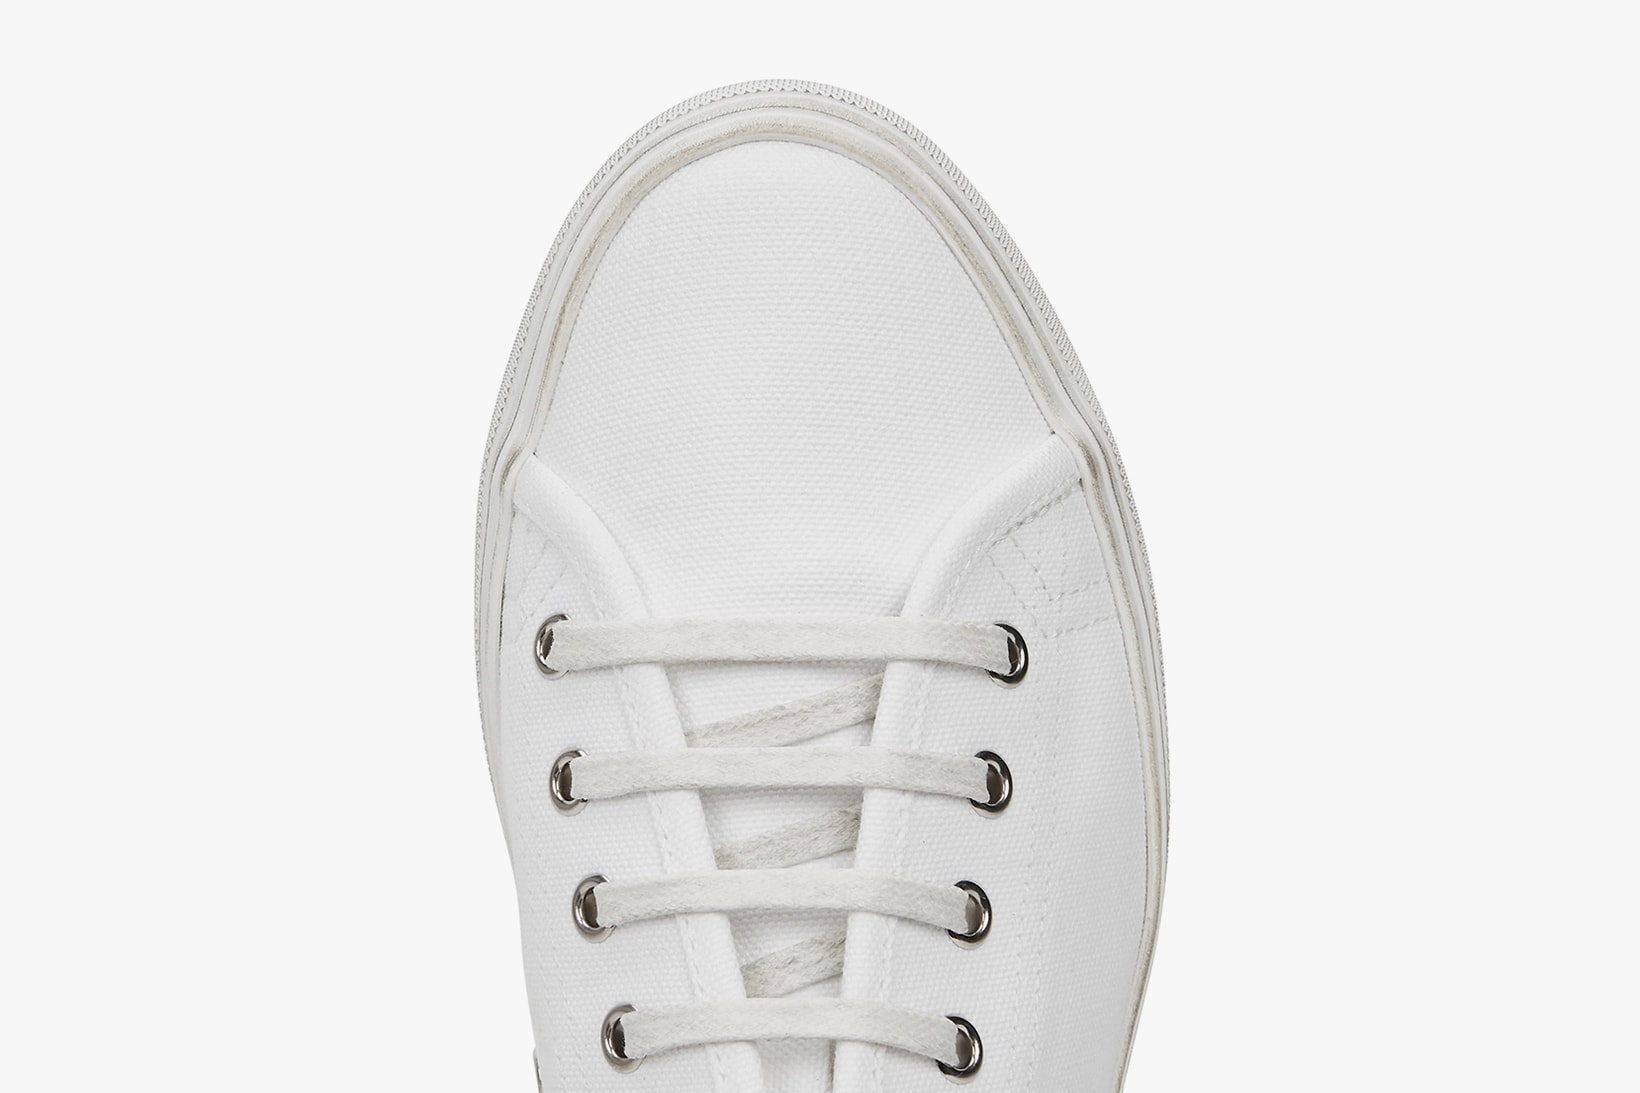 saint laurent canvas sneakers malibu white handwritten logo price minimal